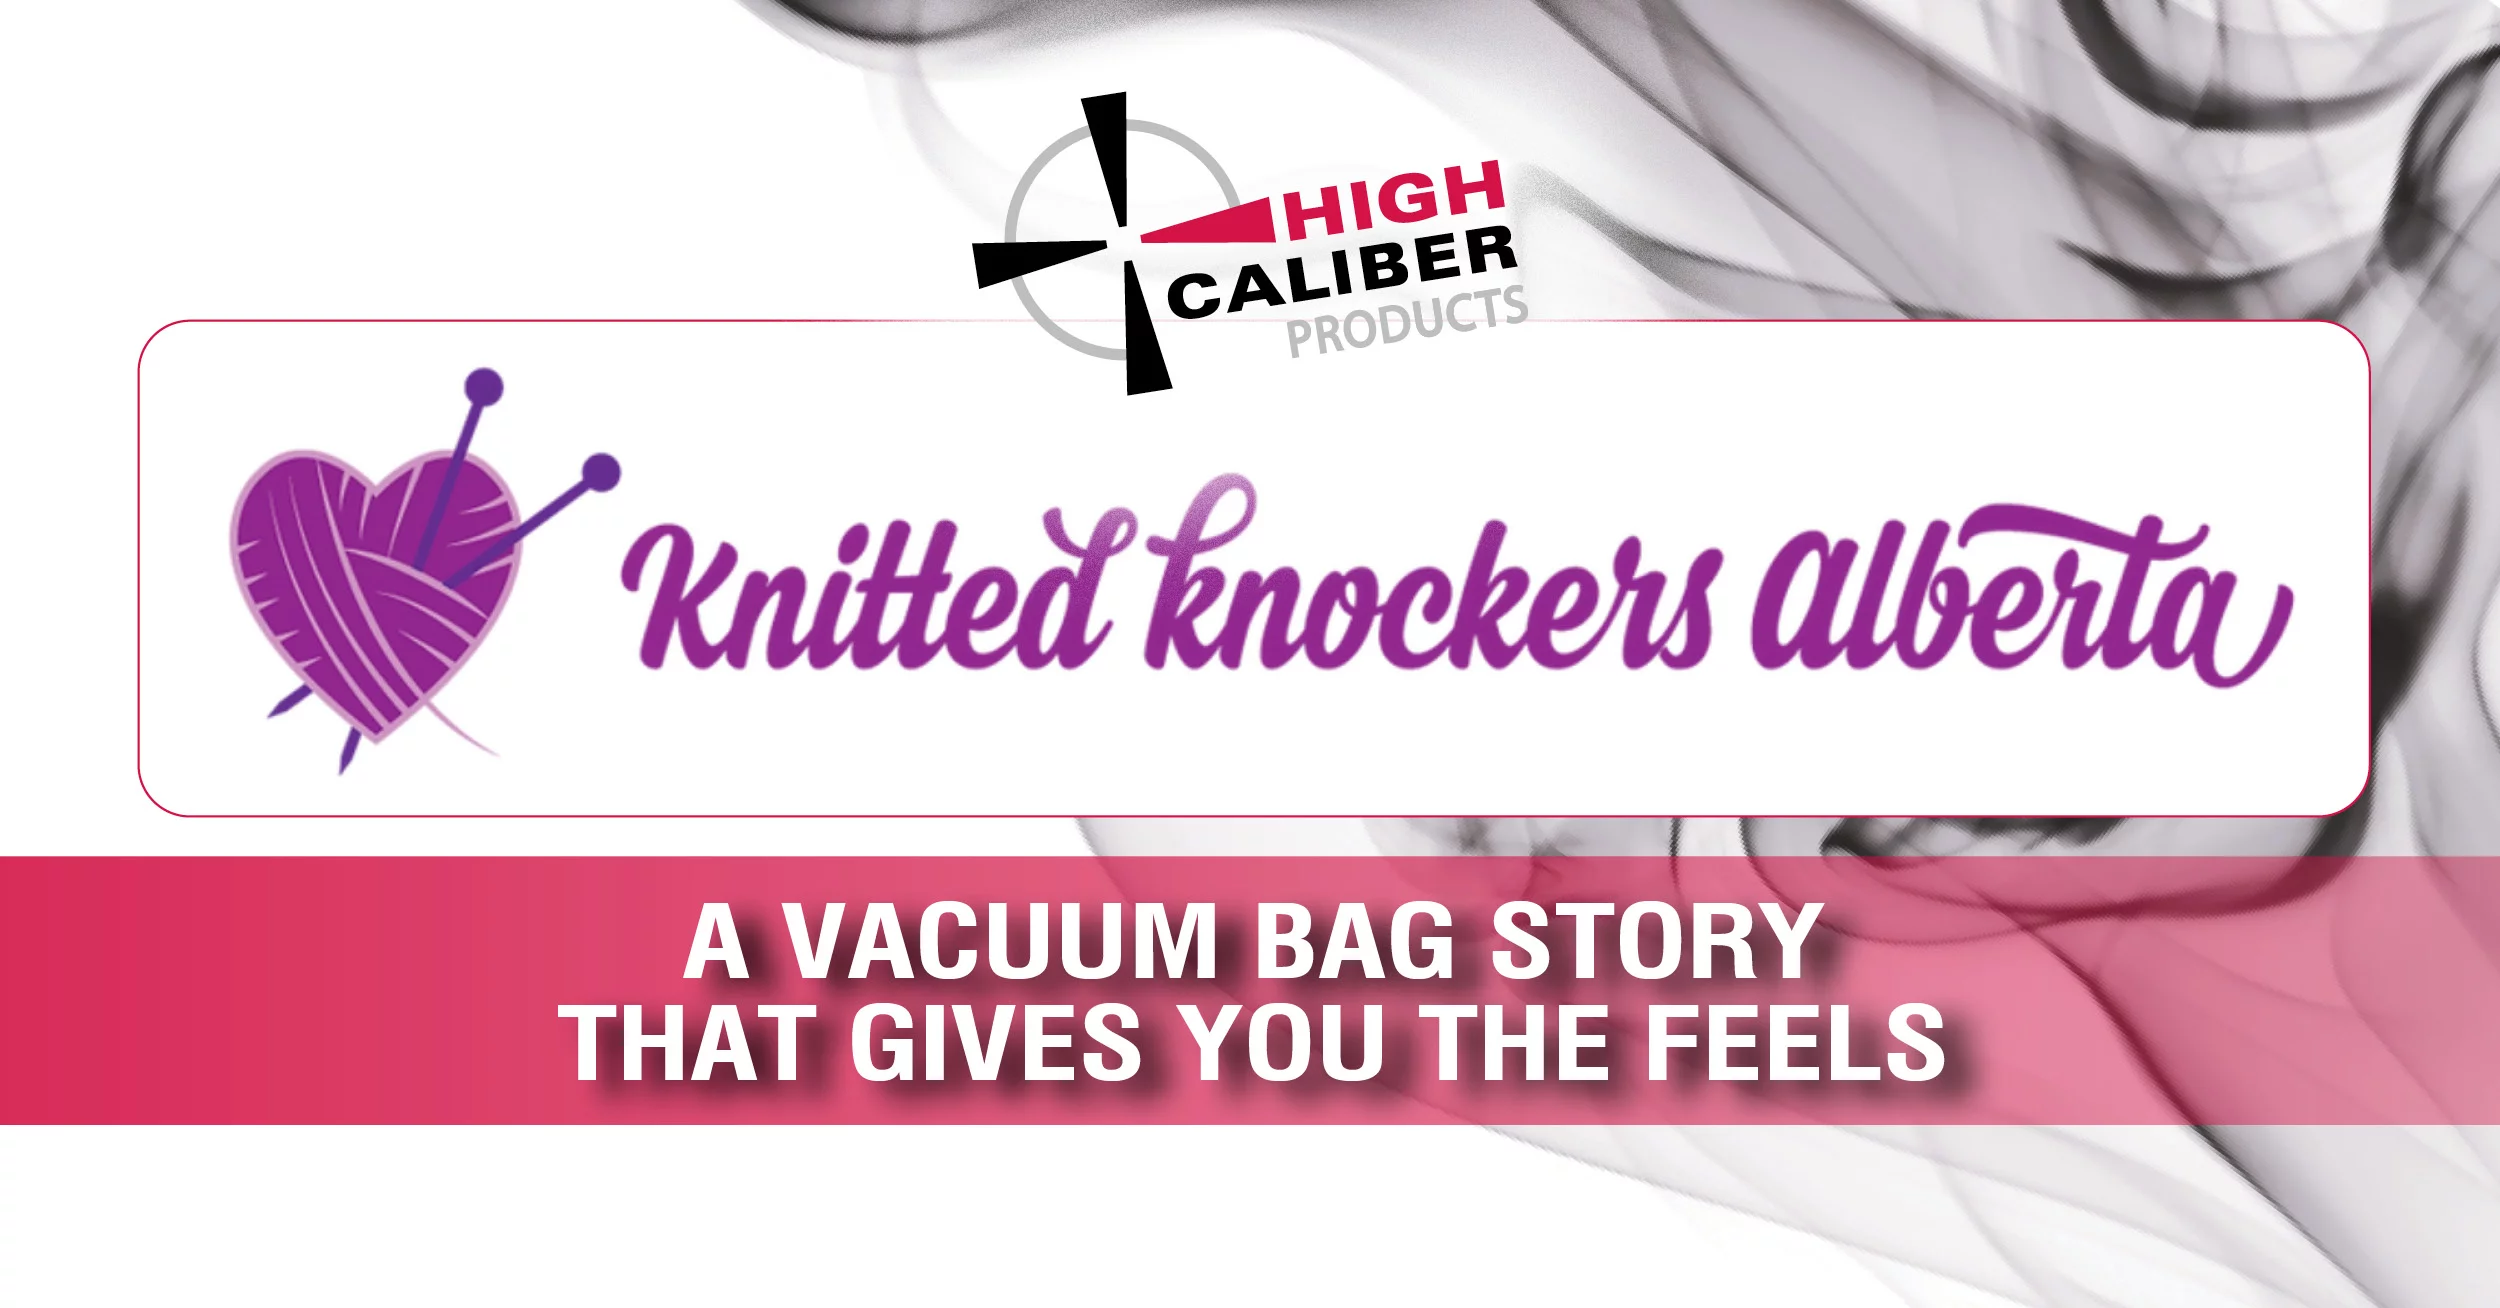 hchigh caliber alberta knitted knockers vacuum bags